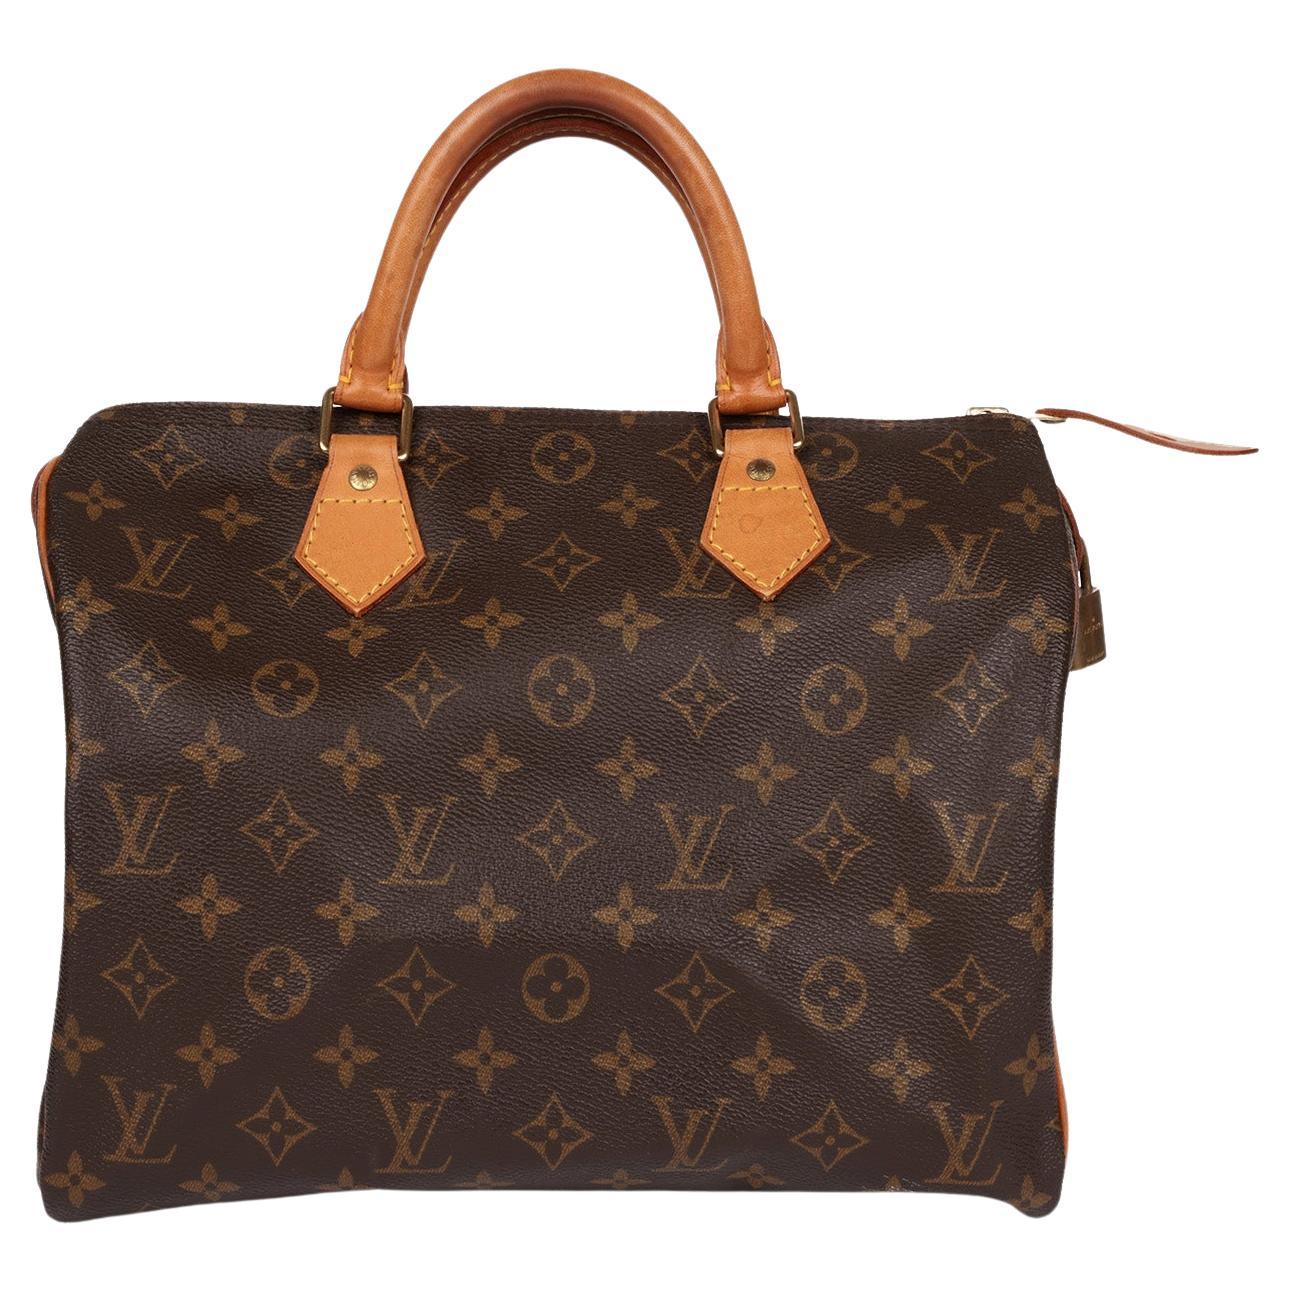 When did Louis Vuitton start making bags?